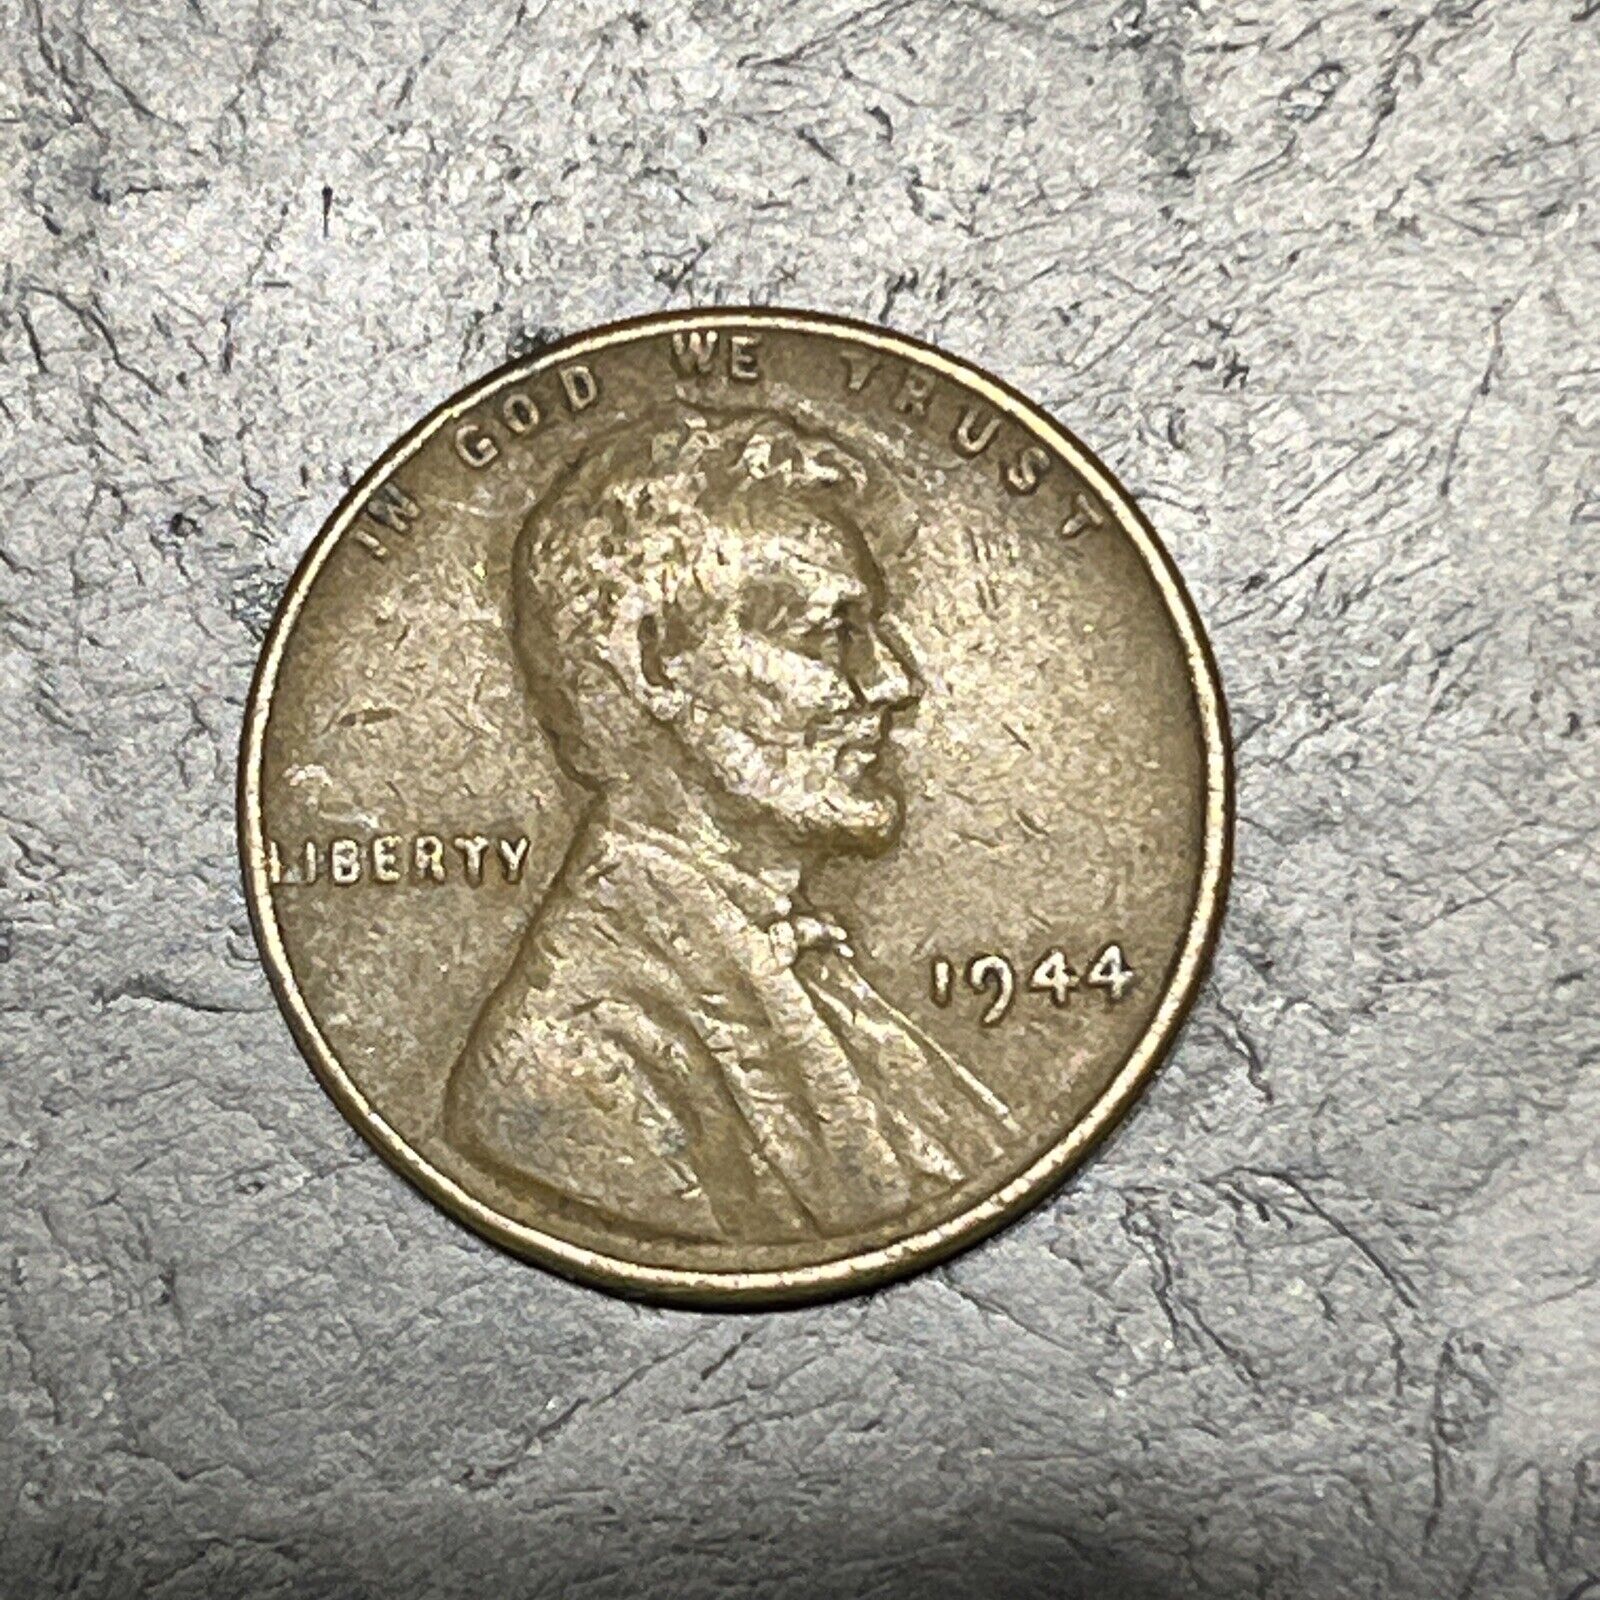 RARE 1944 Wheat Penny Cent Coin Error  “L” in Liberty is in Rim  & No Mint Mark